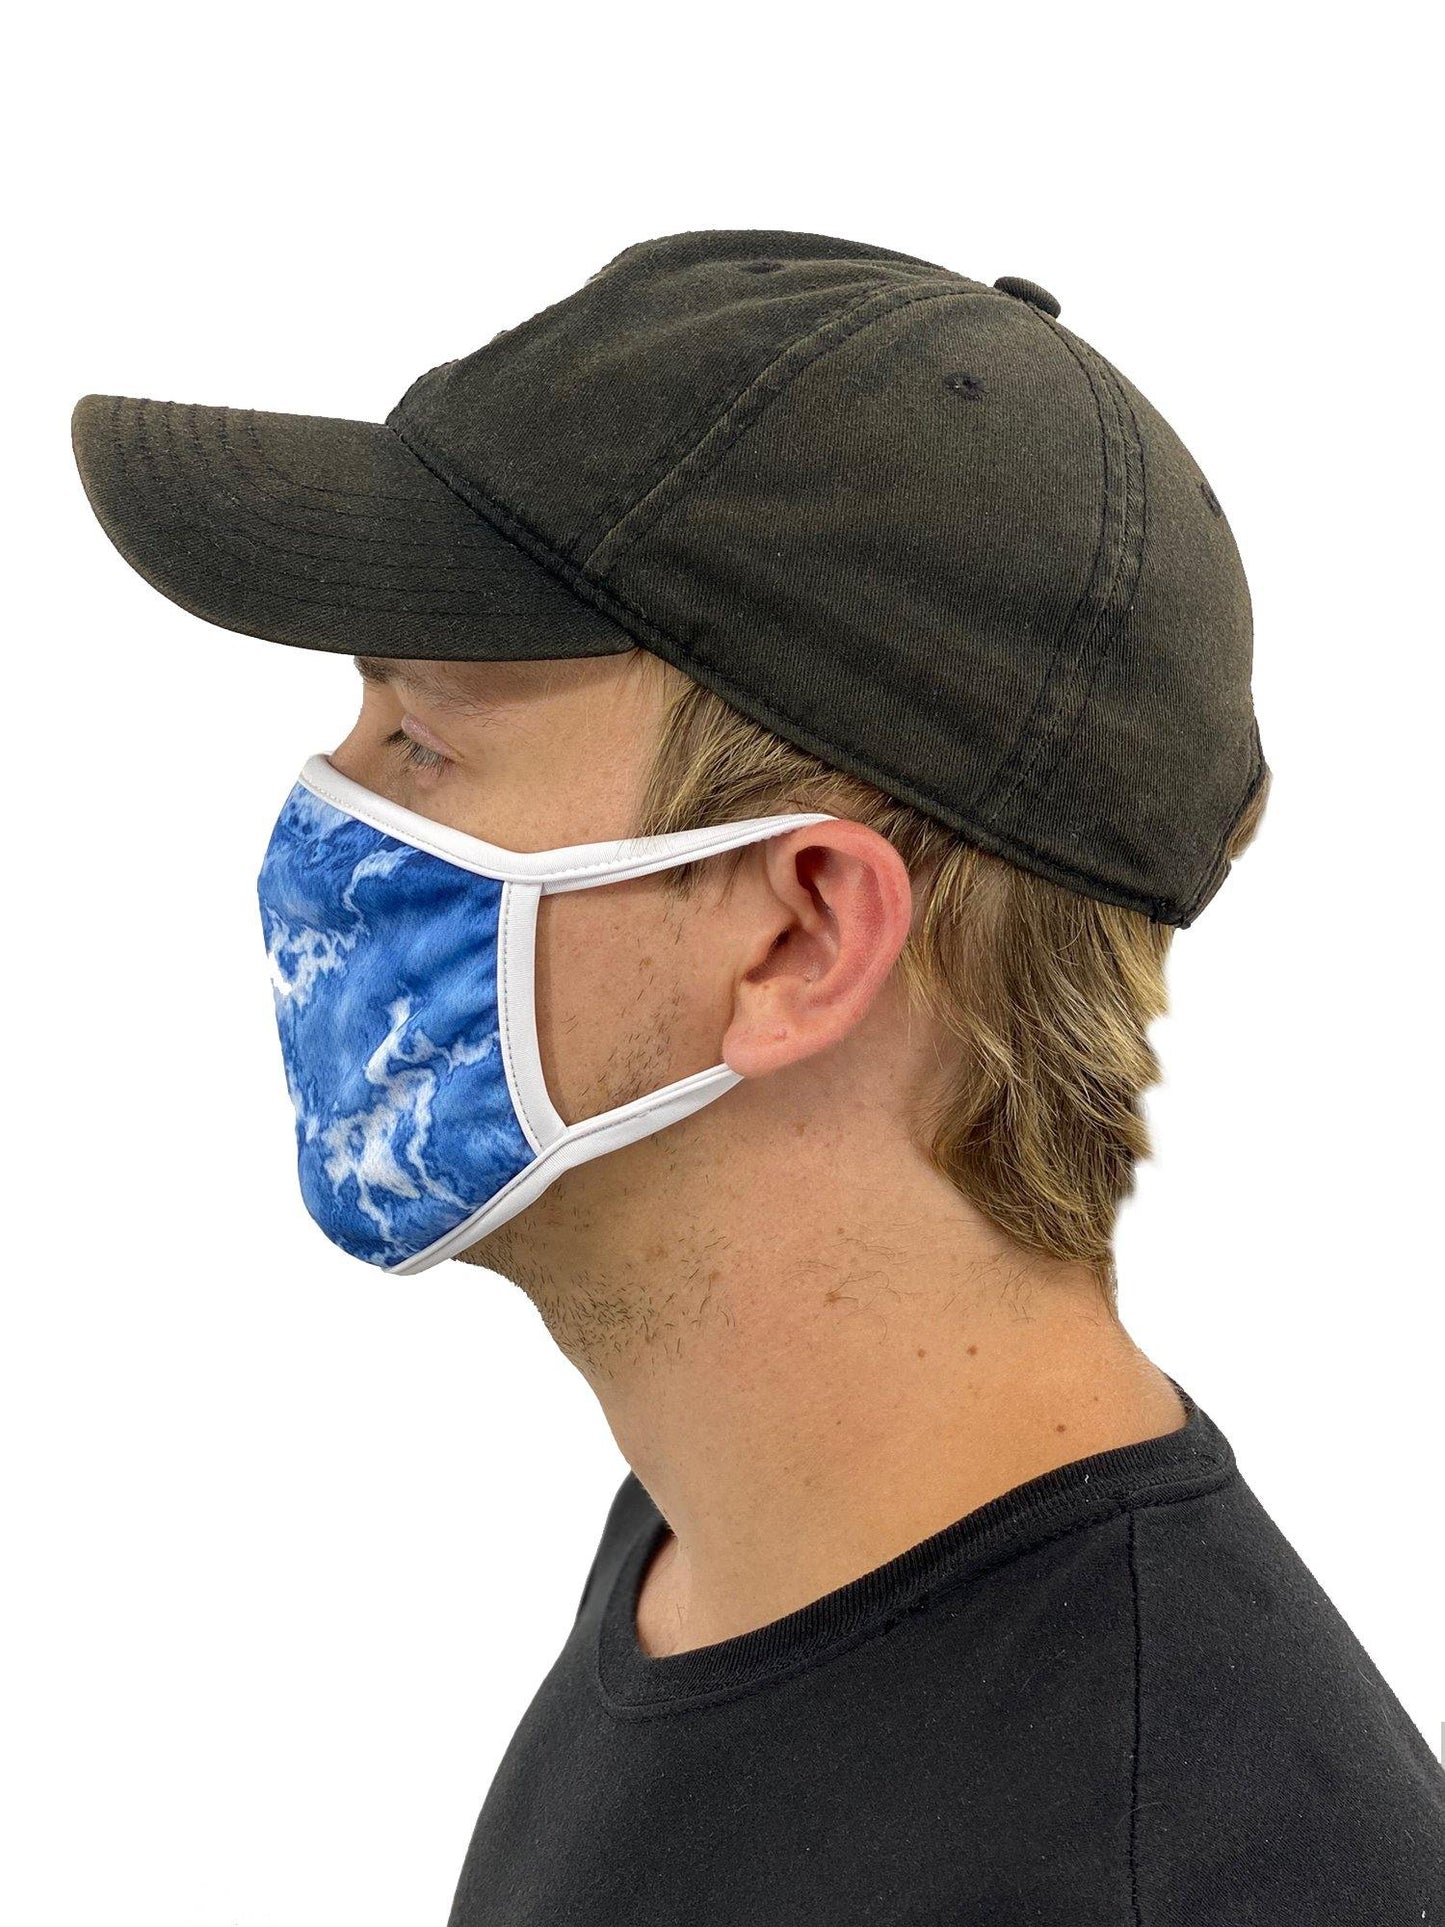 Blue Acid Wash Face Mask With Filter Pocket - USA Made Dropship